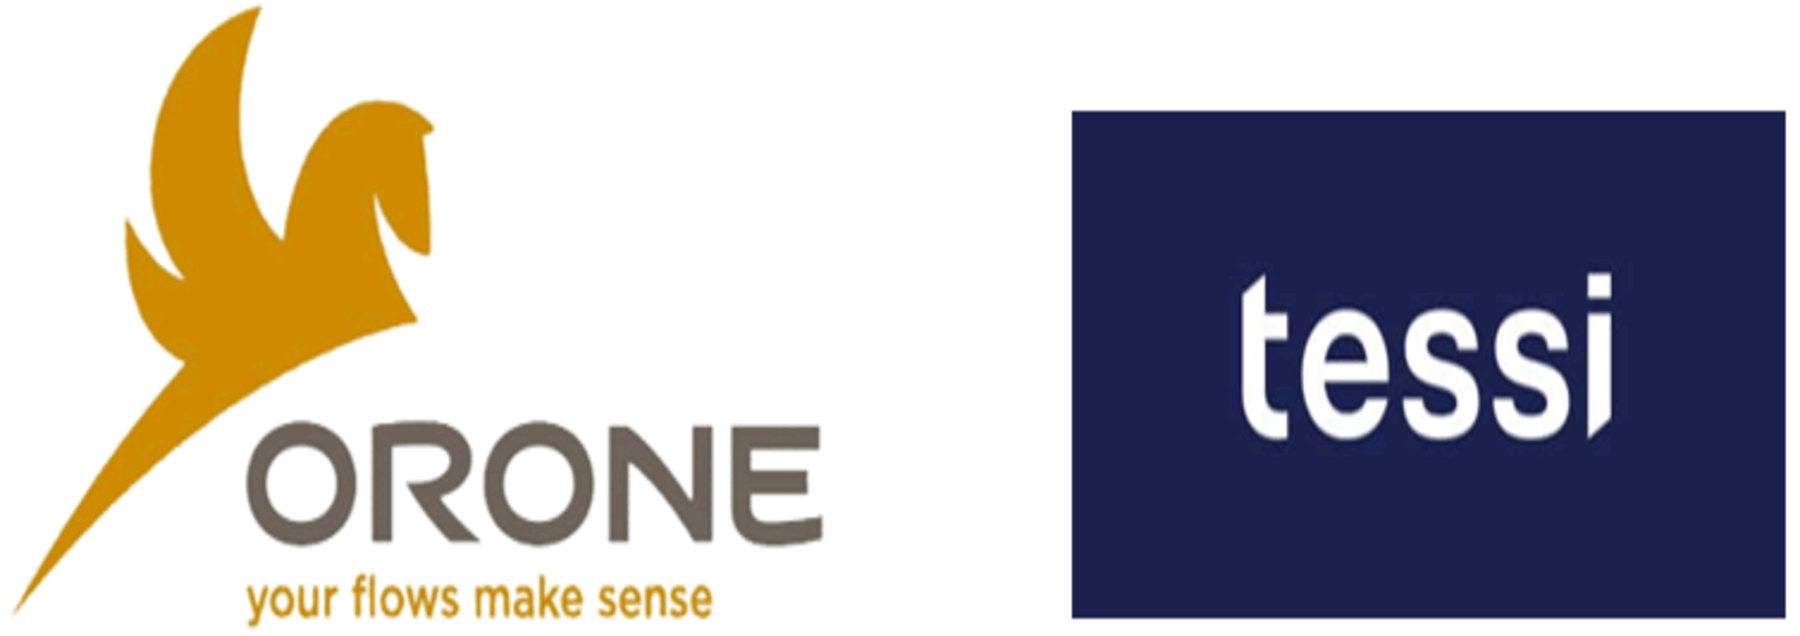 Orone Tessi logo